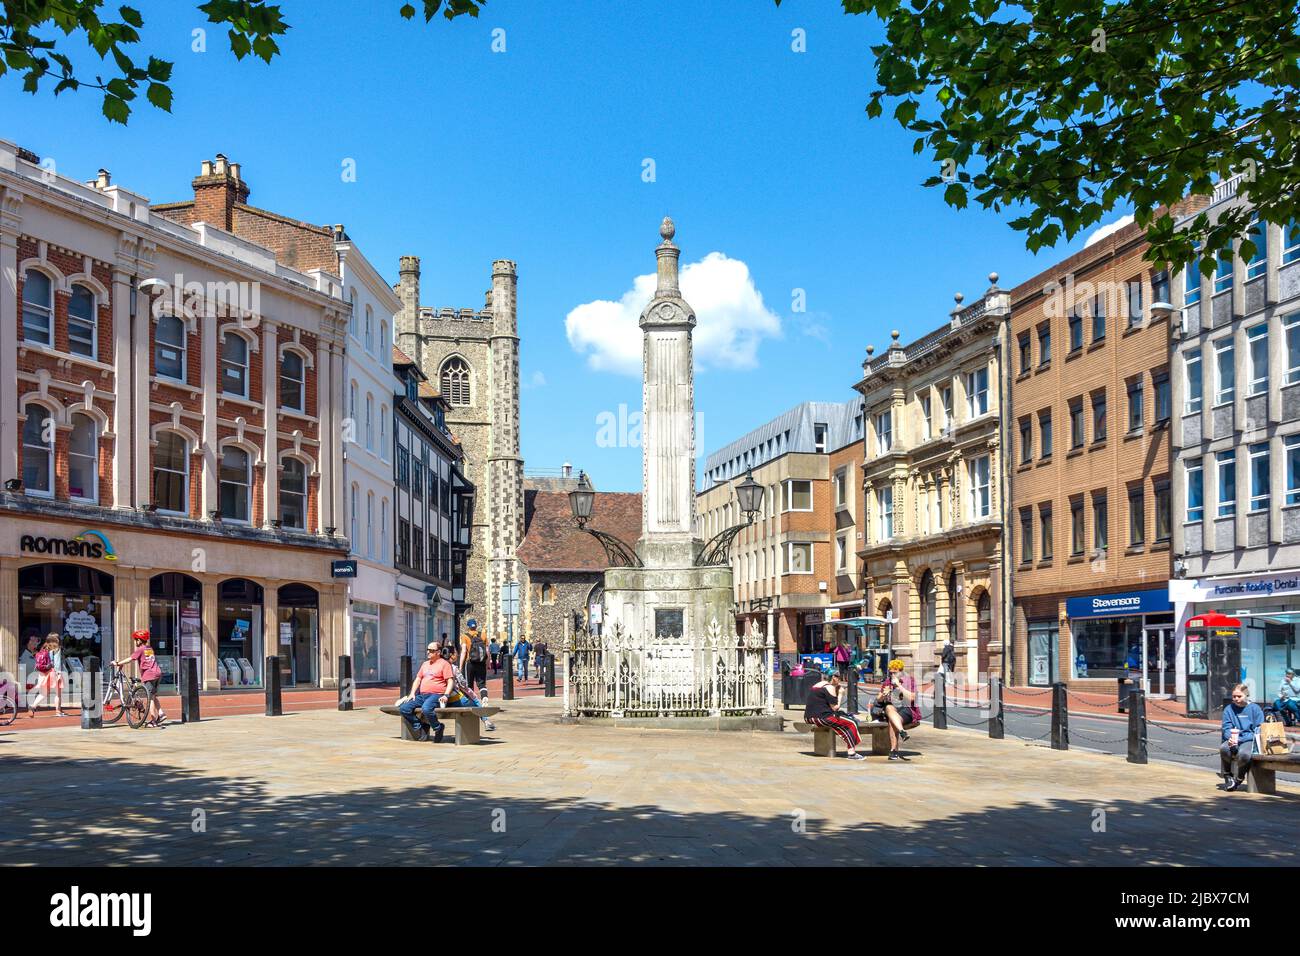 Market Place Square, Market Place, Reading, Vereinigtes Königreich Stockfoto